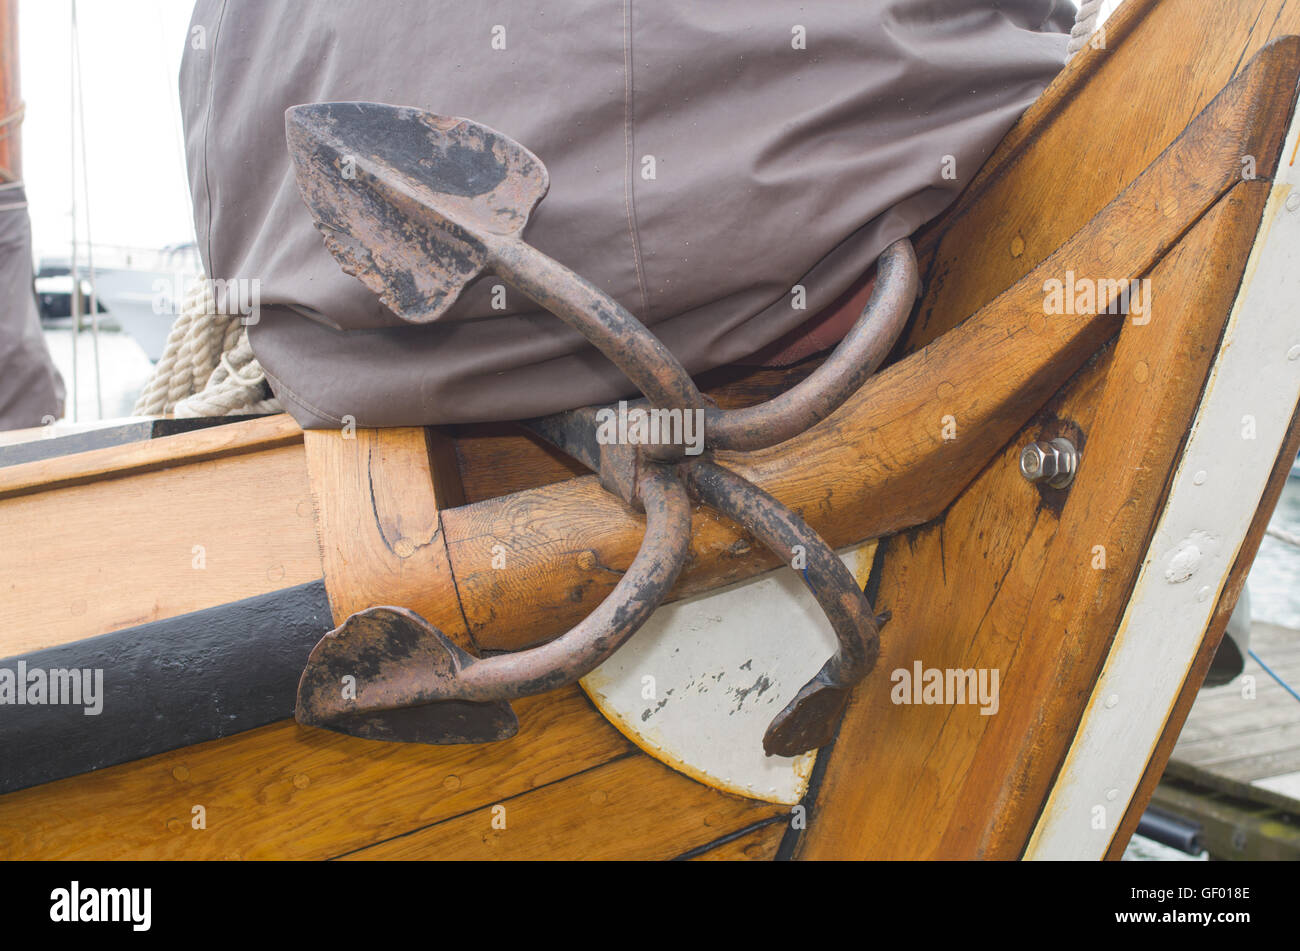 4 fluked anchor on wooden boat Stock Photo